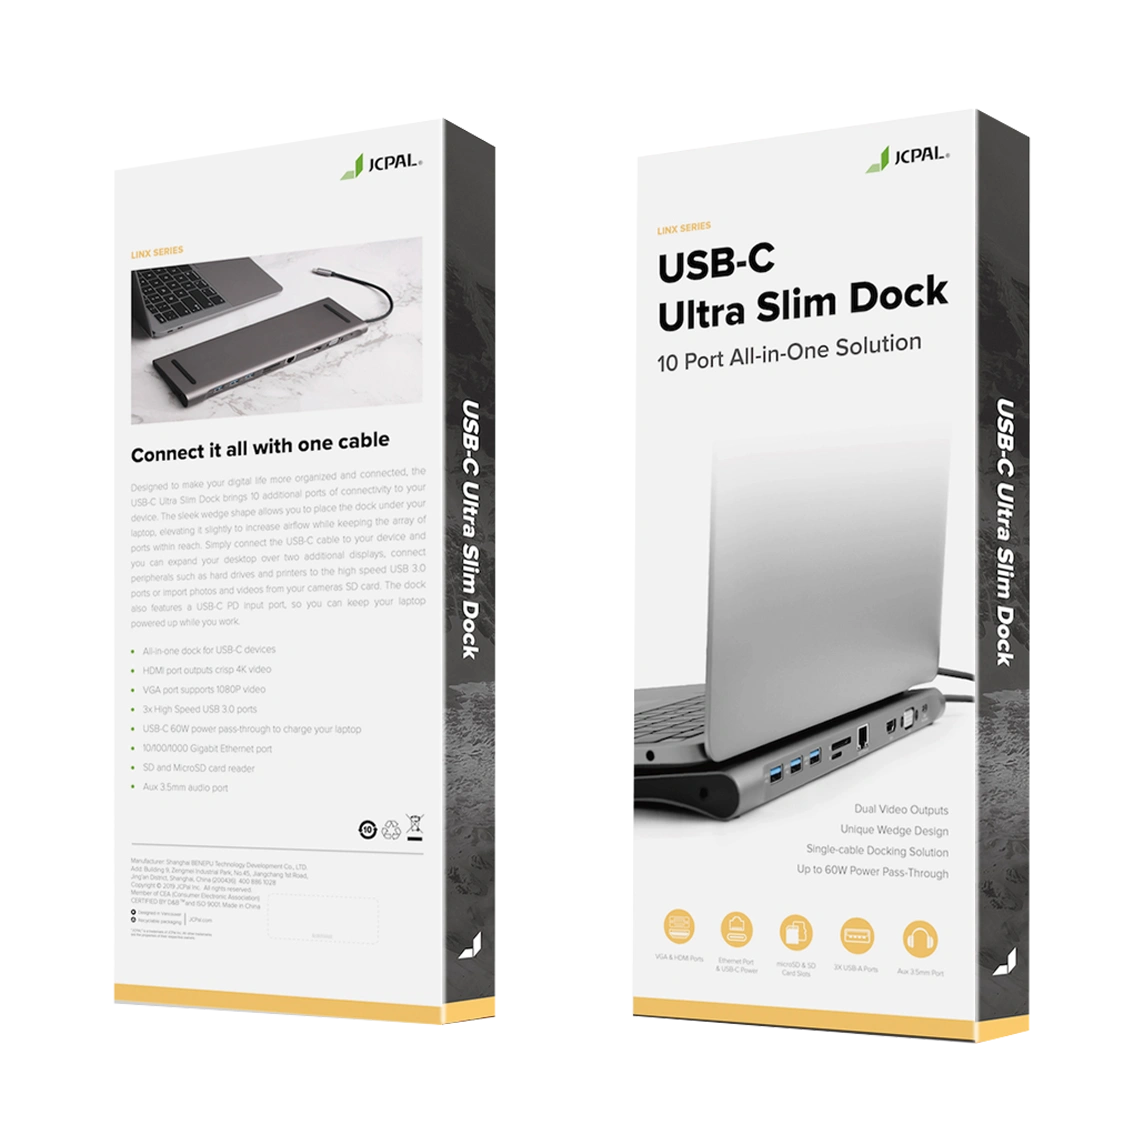 Jcpal LINX USB-C 10-Port Ultra Slim Dock-2